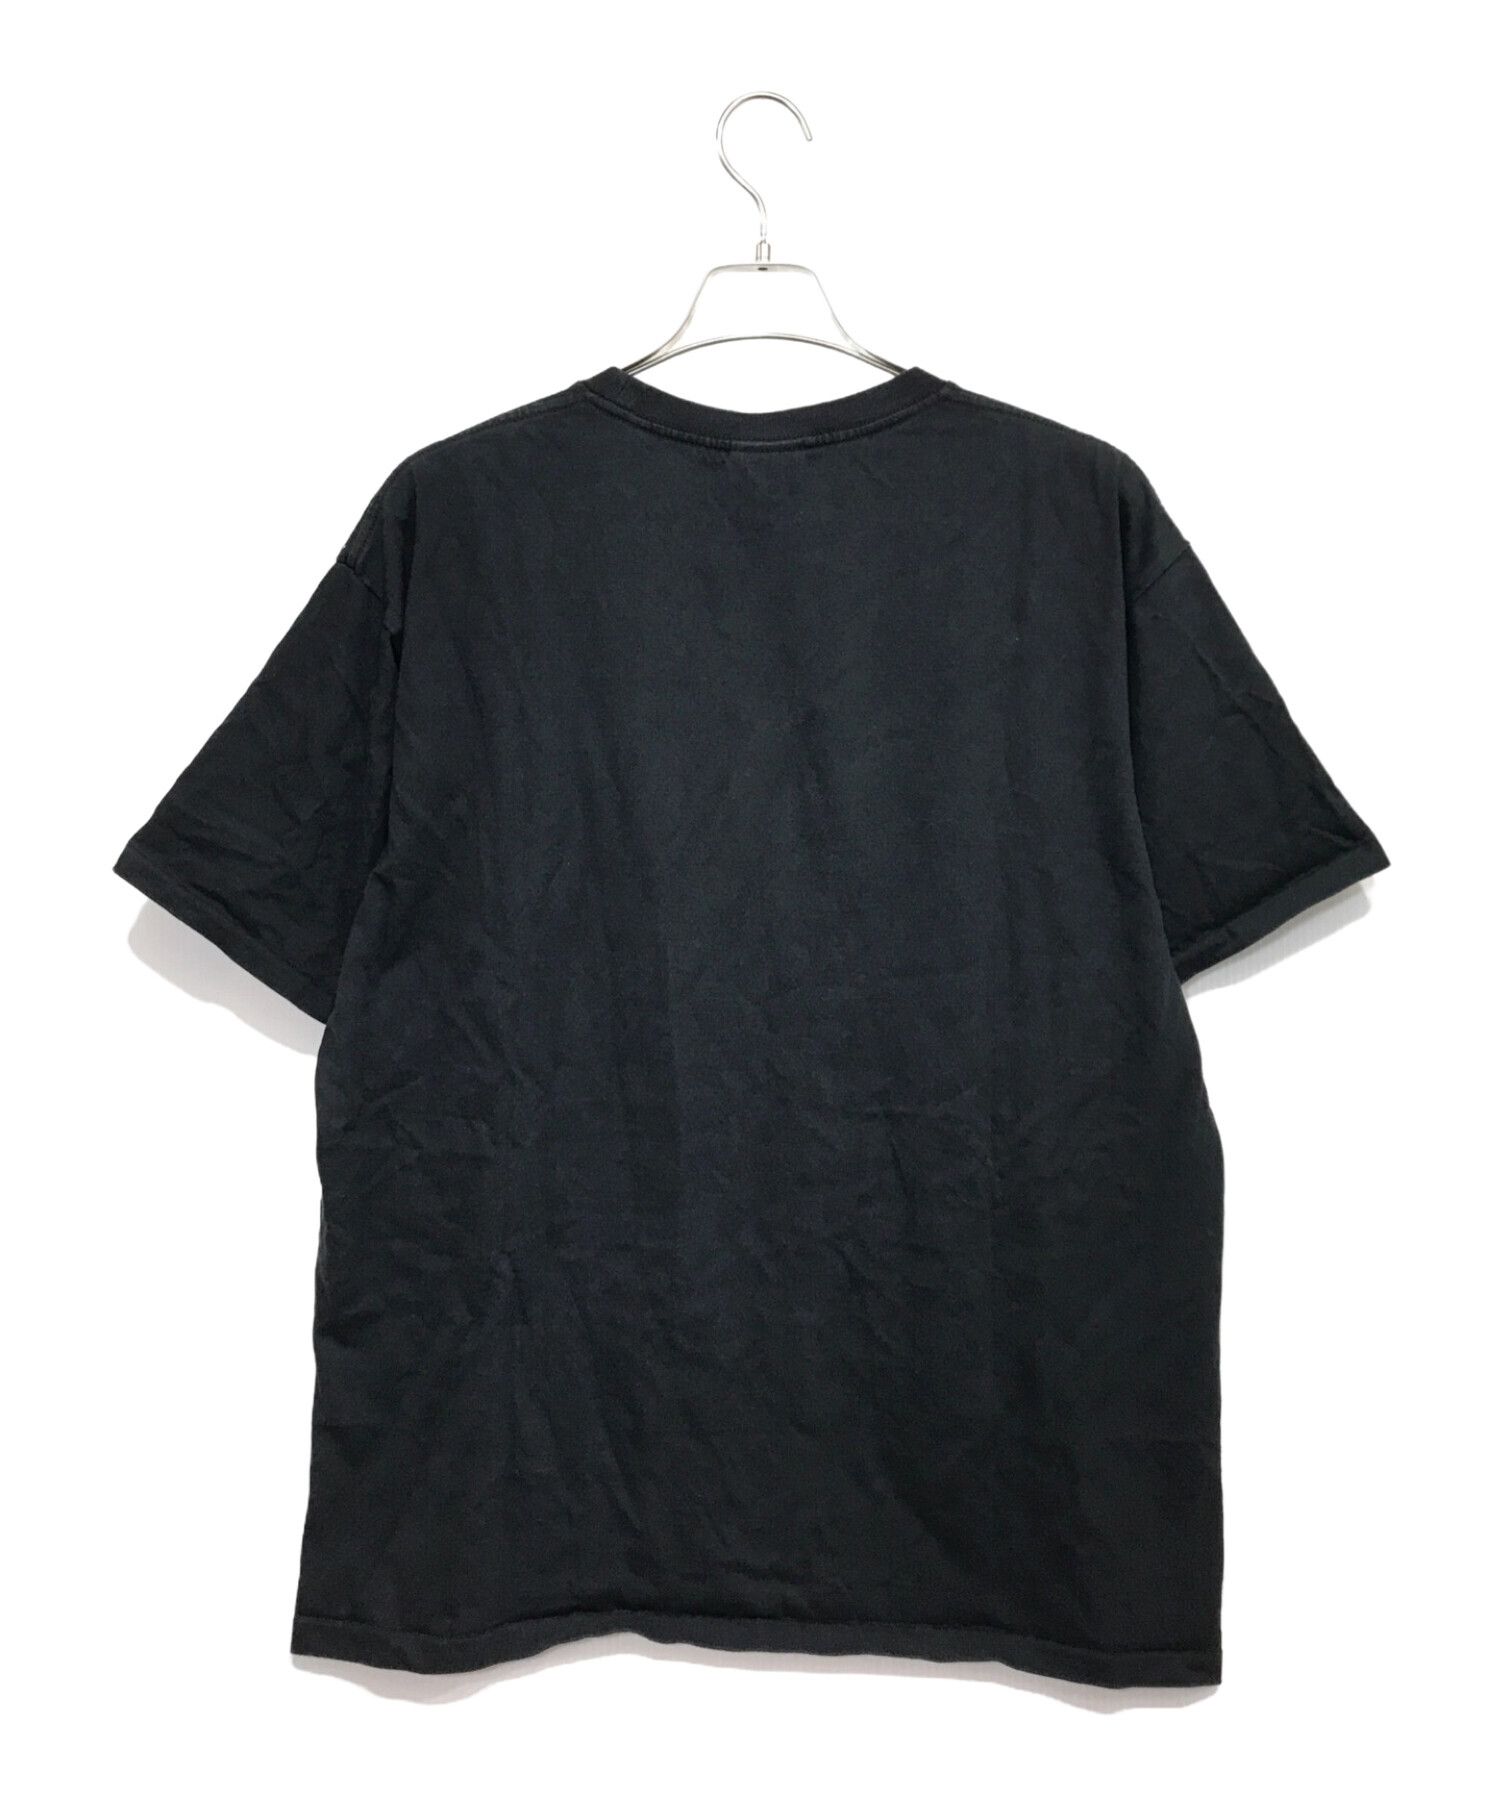 A BATHING APE (アベイシングエイプ) SS SHARK TEE シャークプリントTシャツ ブラック サイズ:2XL